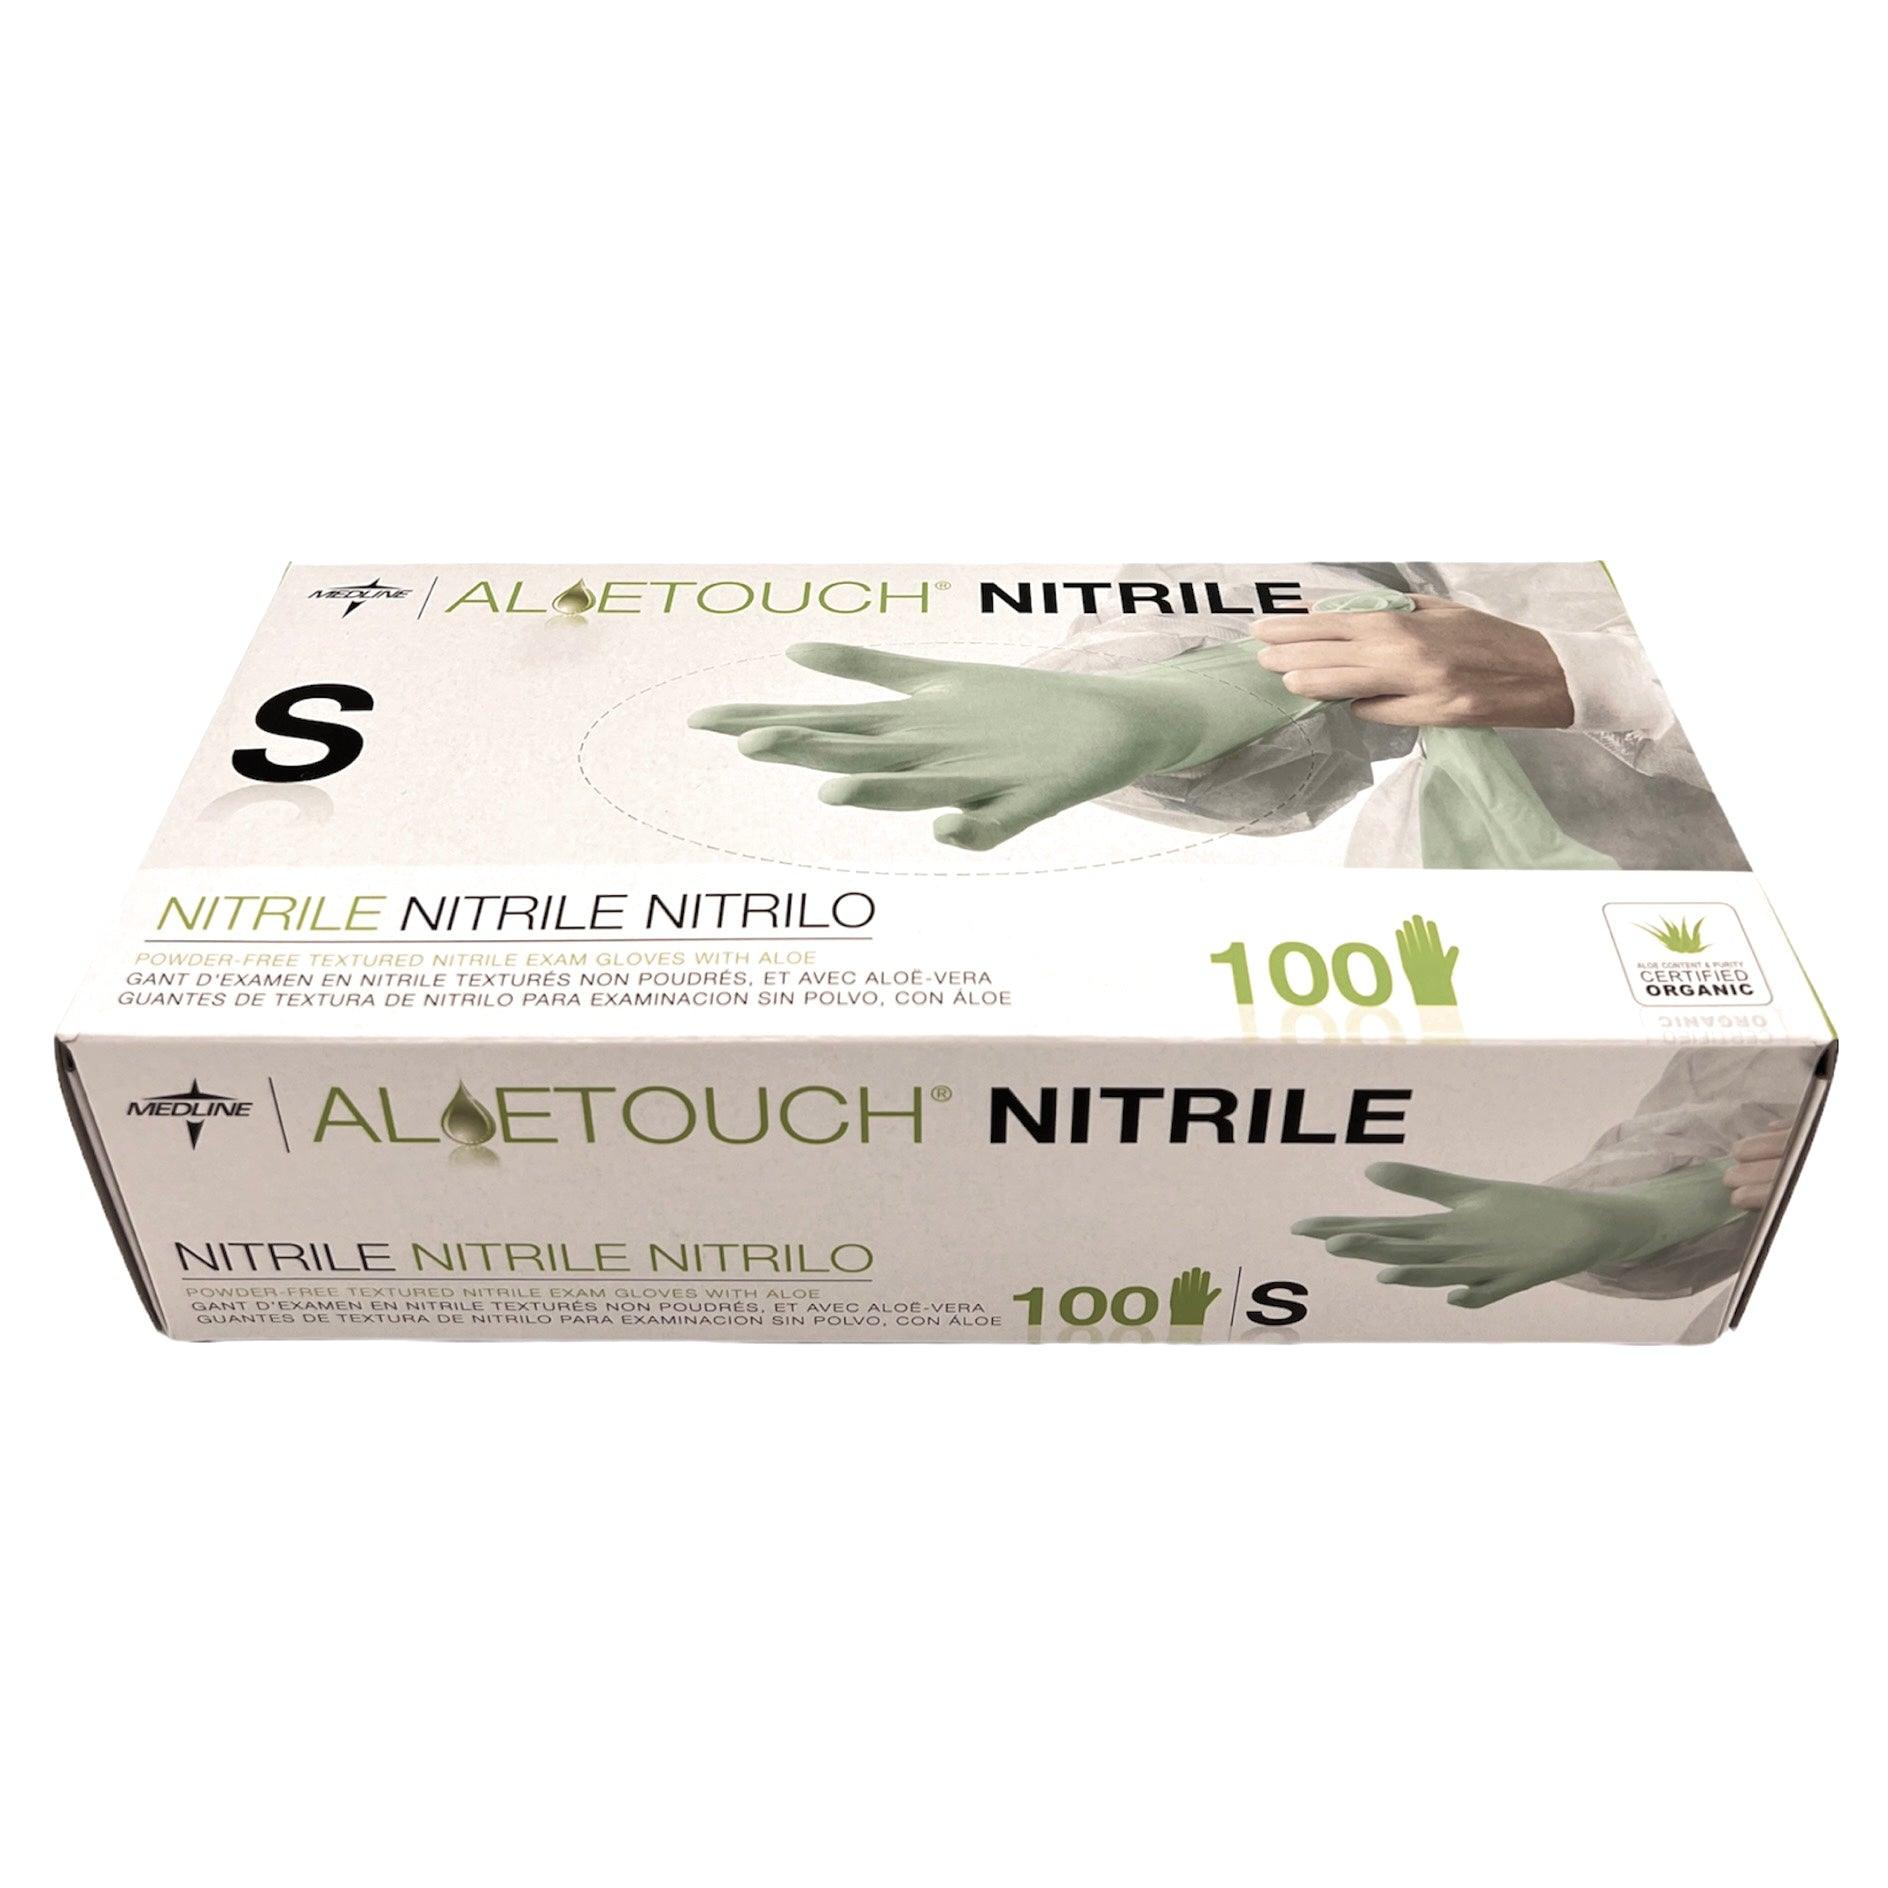 Medline Aloetouch Nitrile Powder-Free Exam Glove Chemo Approved